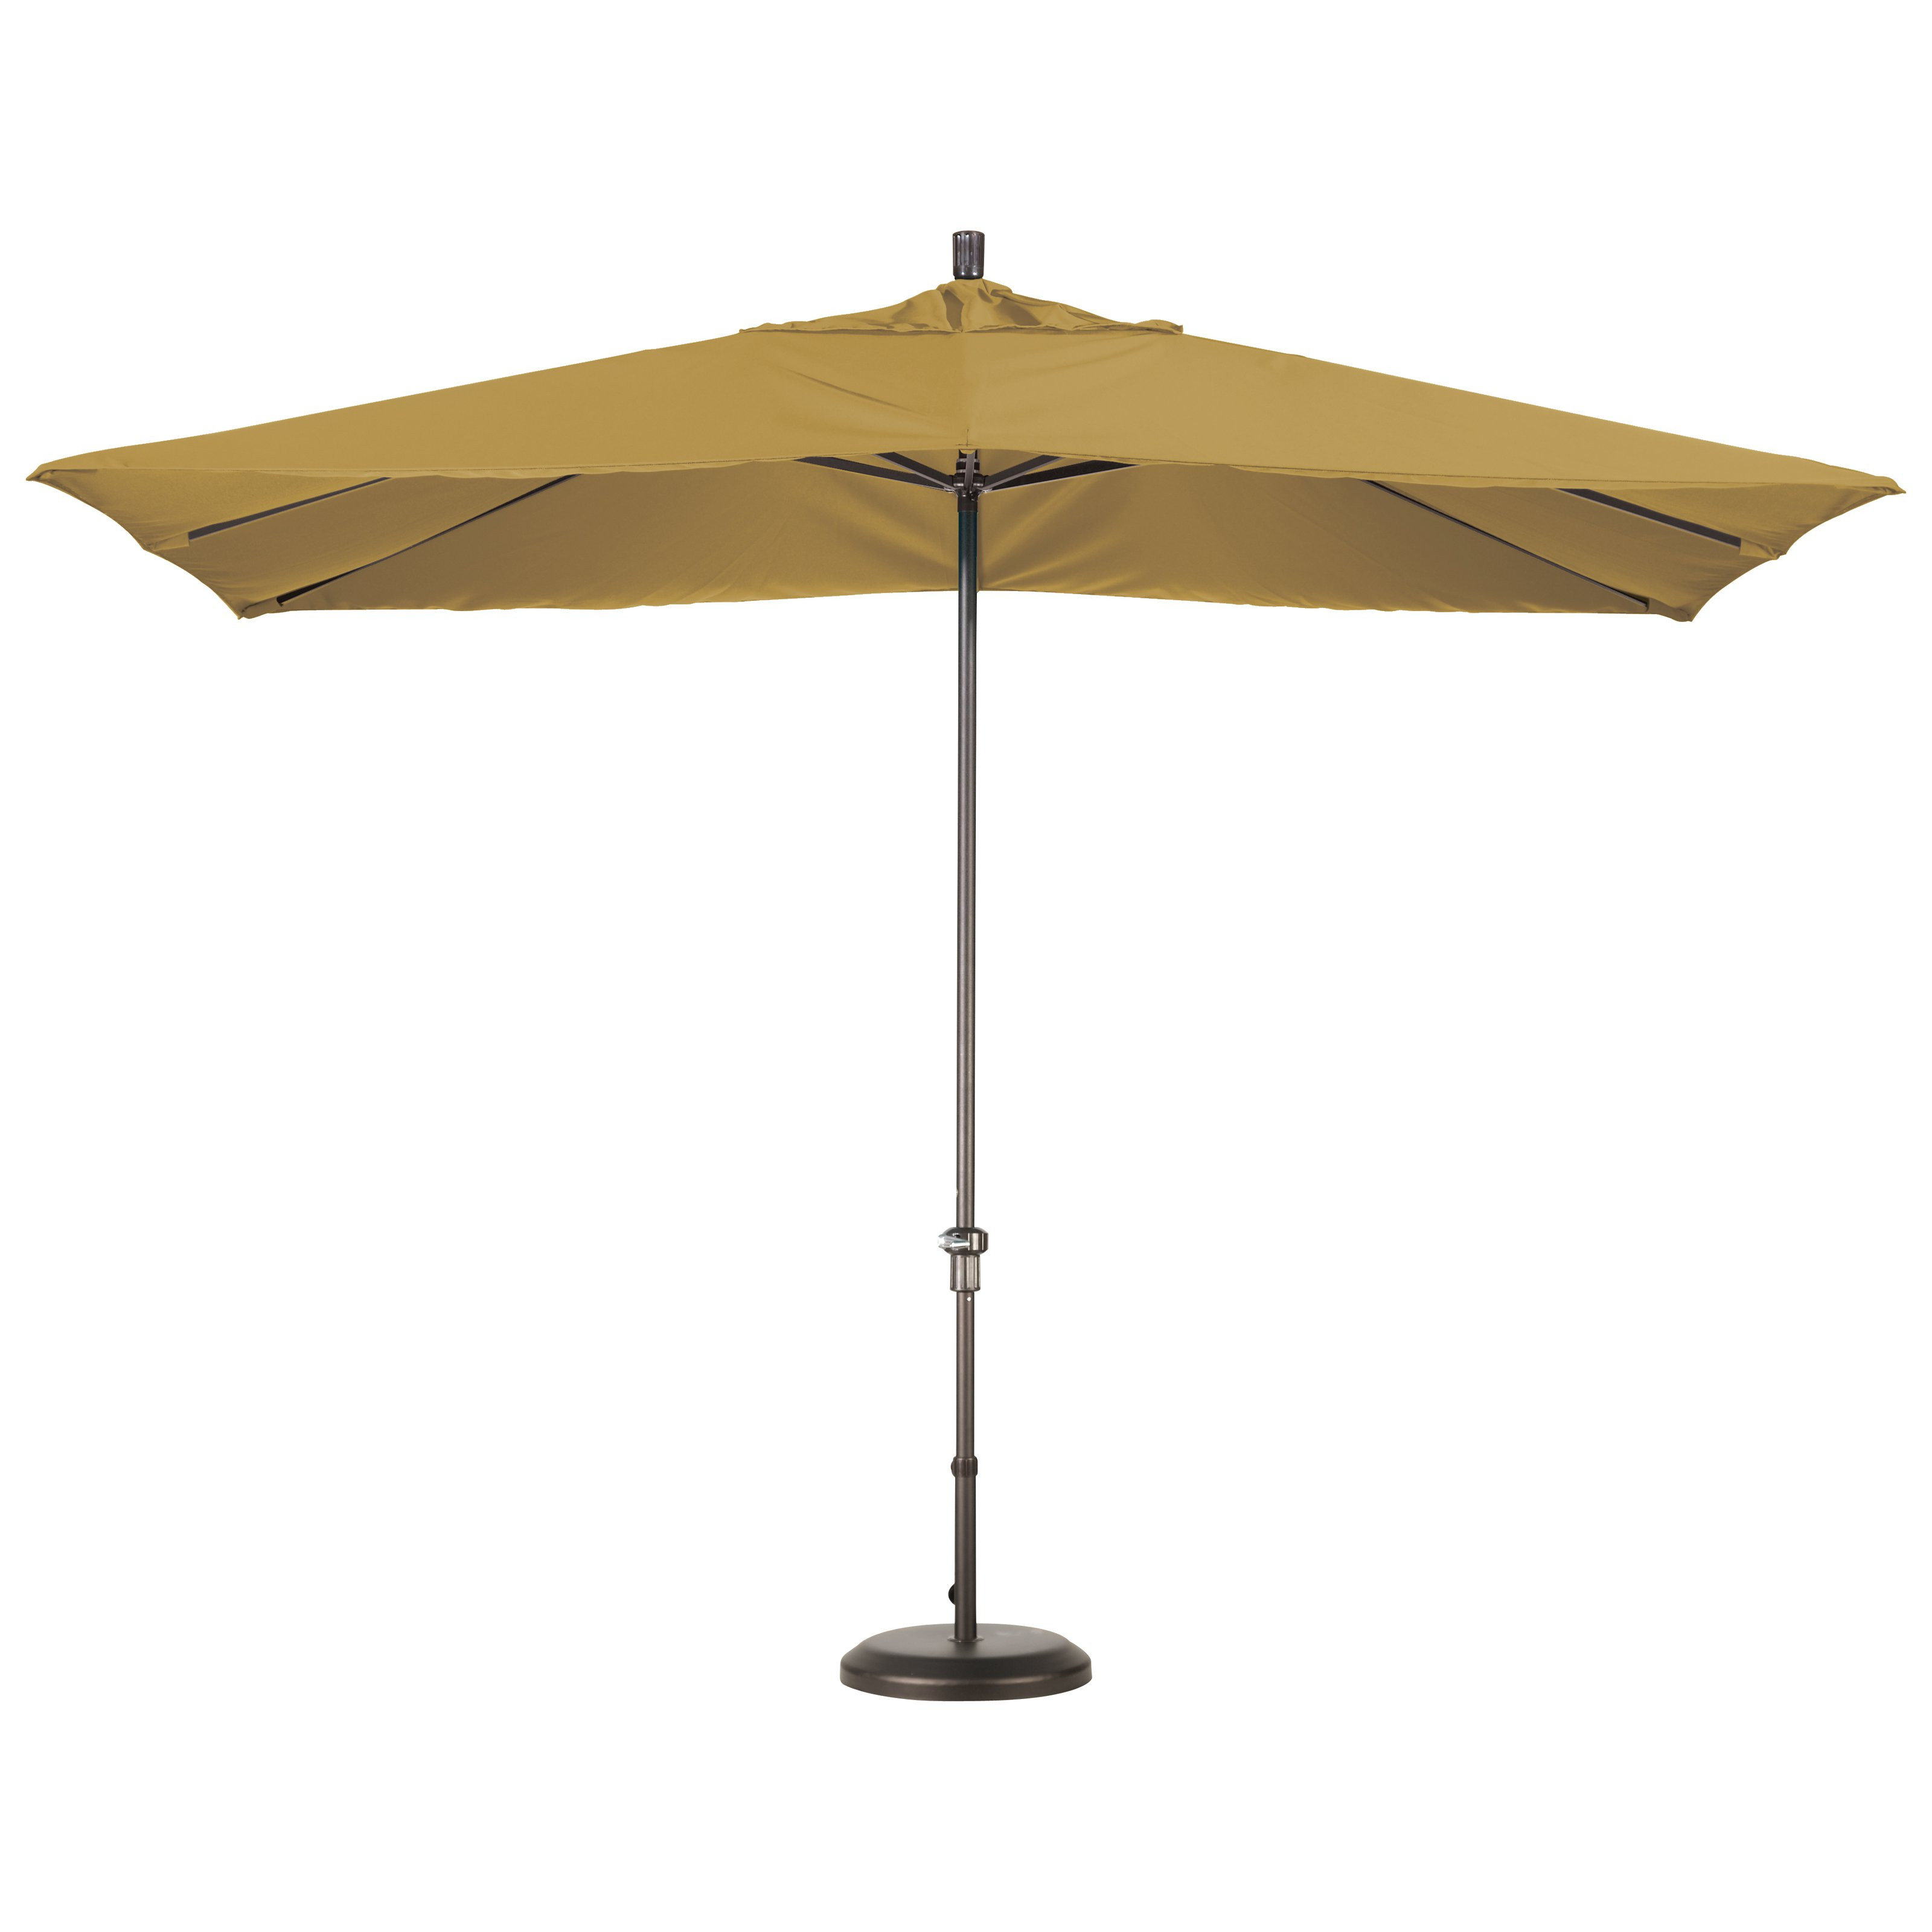 Best ideas about Rectangular Patio Umbrella
. Save or Pin High Resolution 11 Ft Patio Umbrella 2 11 Ft Rectangular Now.